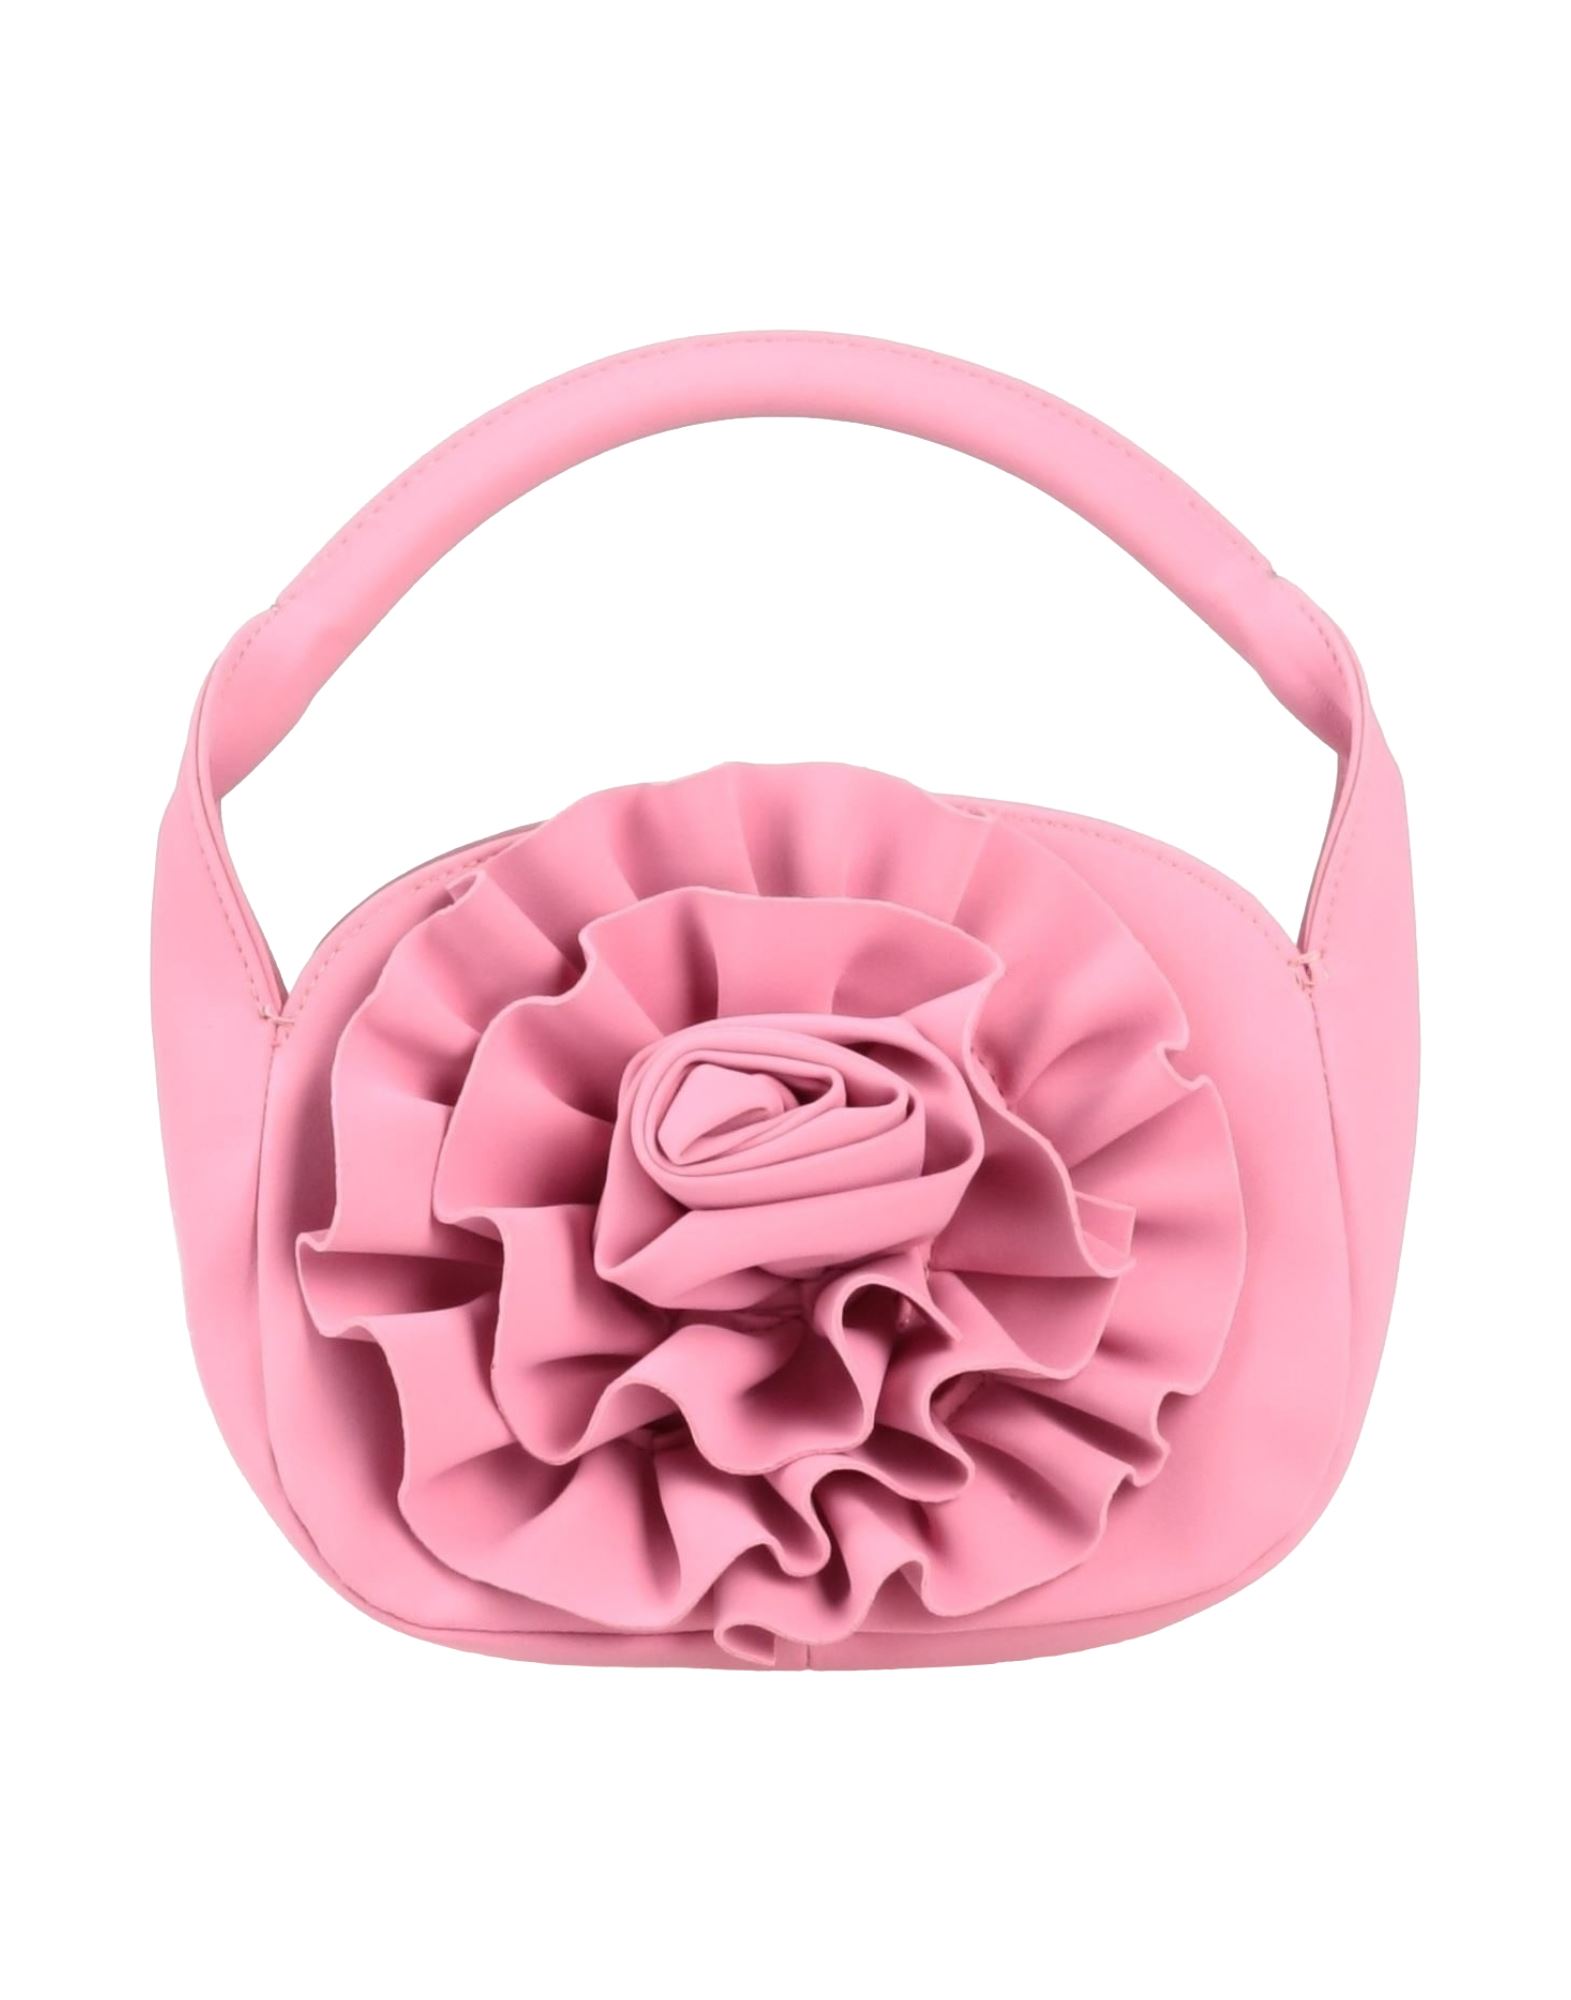 Chiara Boni La Petite Robe Handbags In Pastel Pink | ModeSens